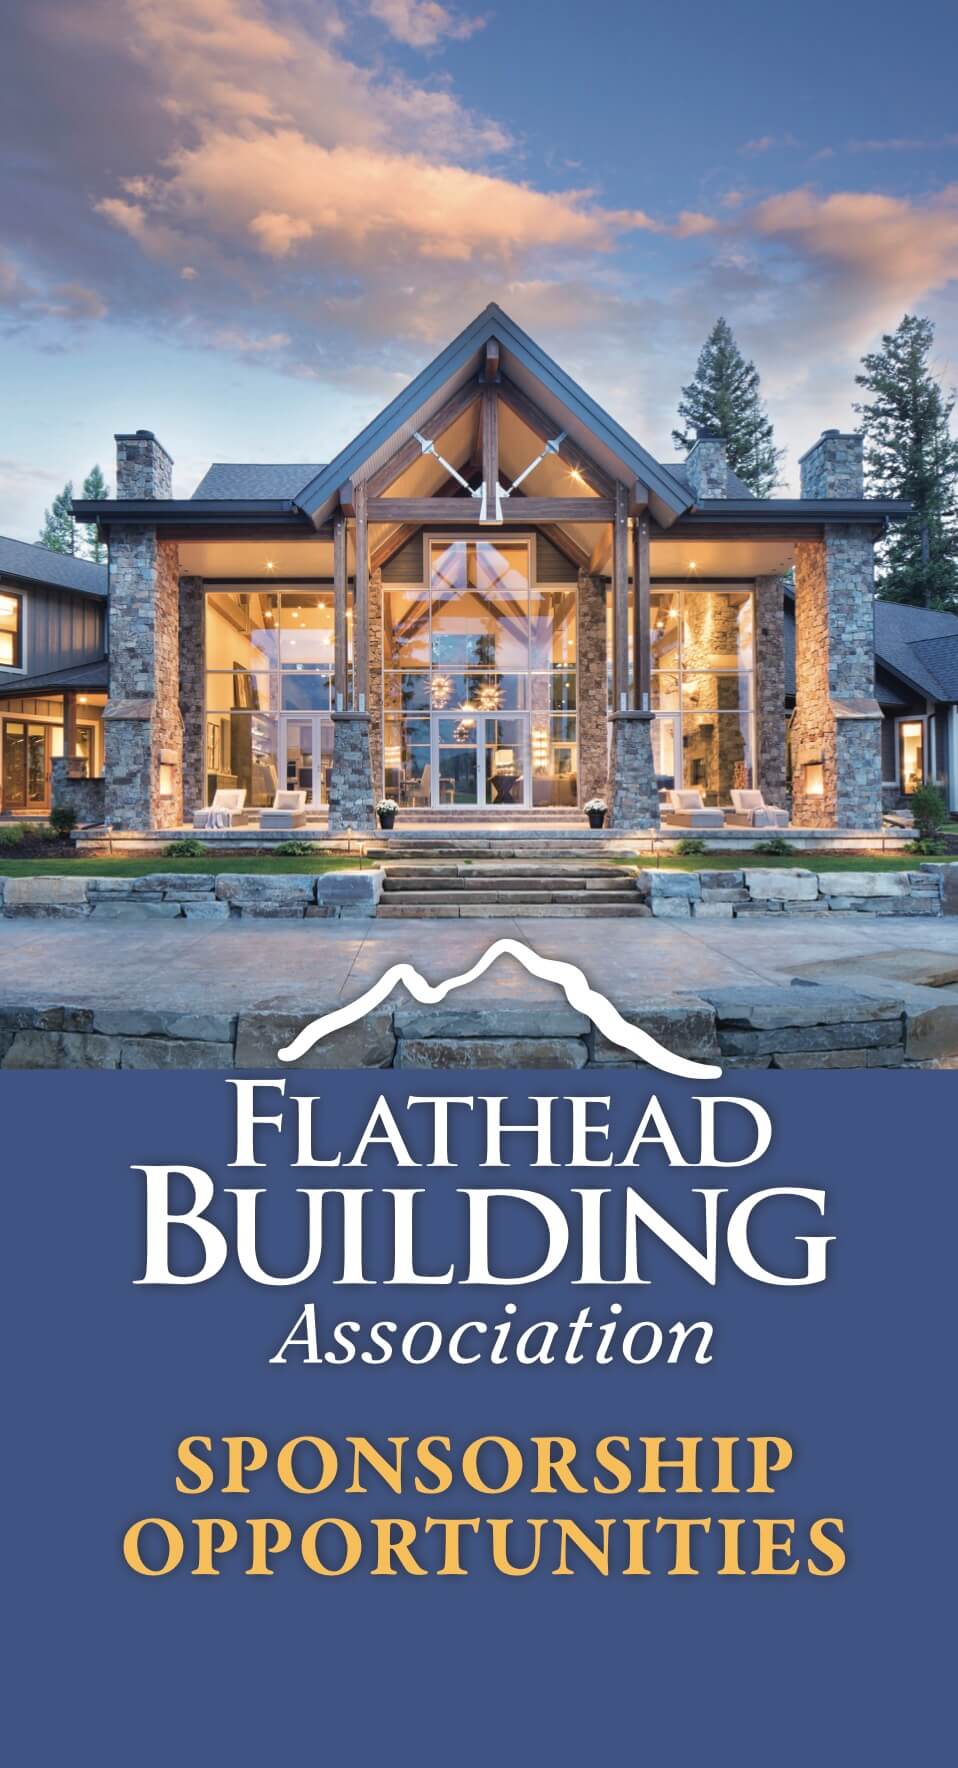 Flathead building association sponsorship opportunities